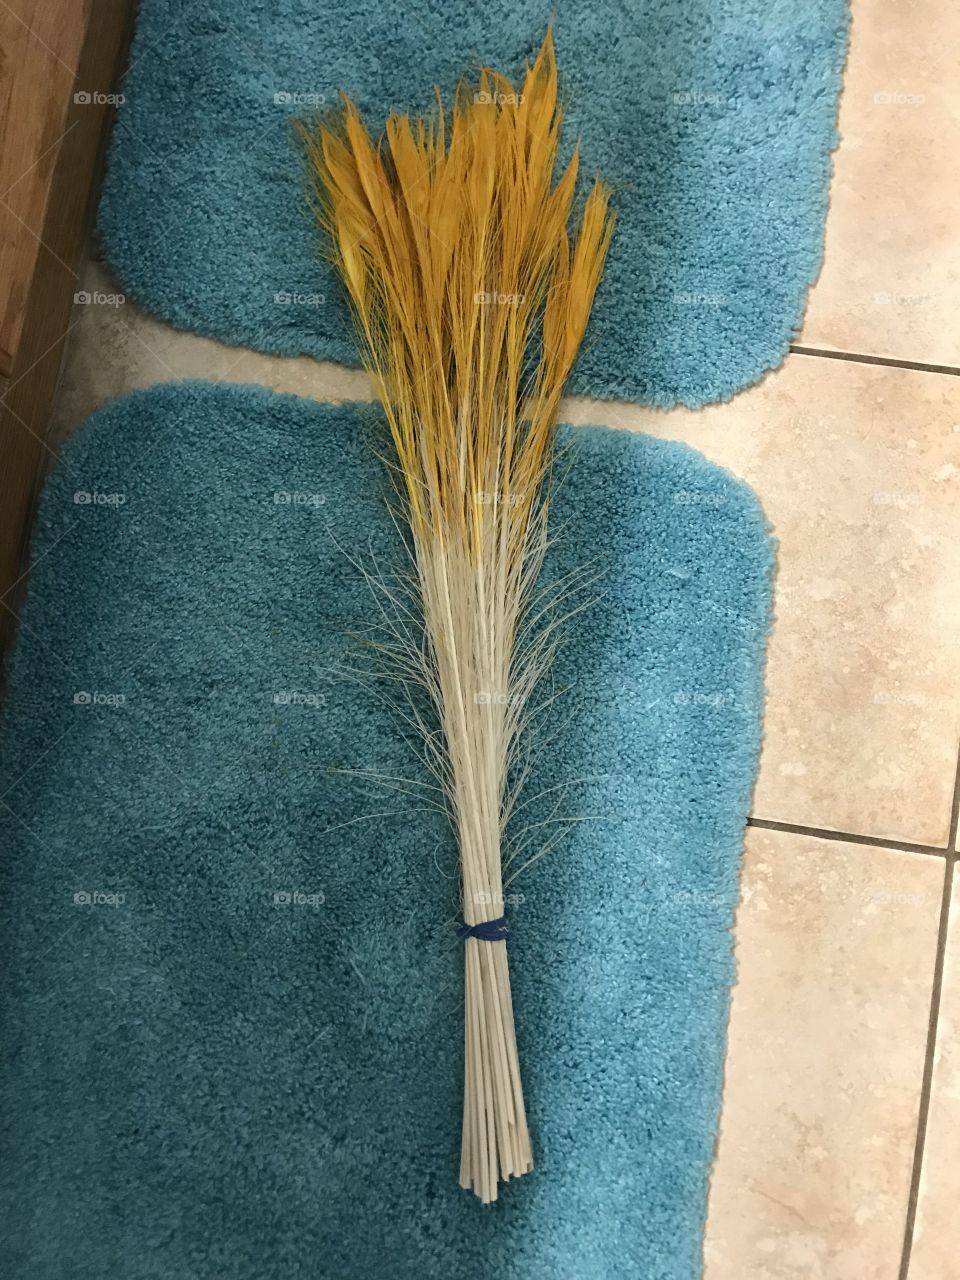 To tie dye white peacock feathers